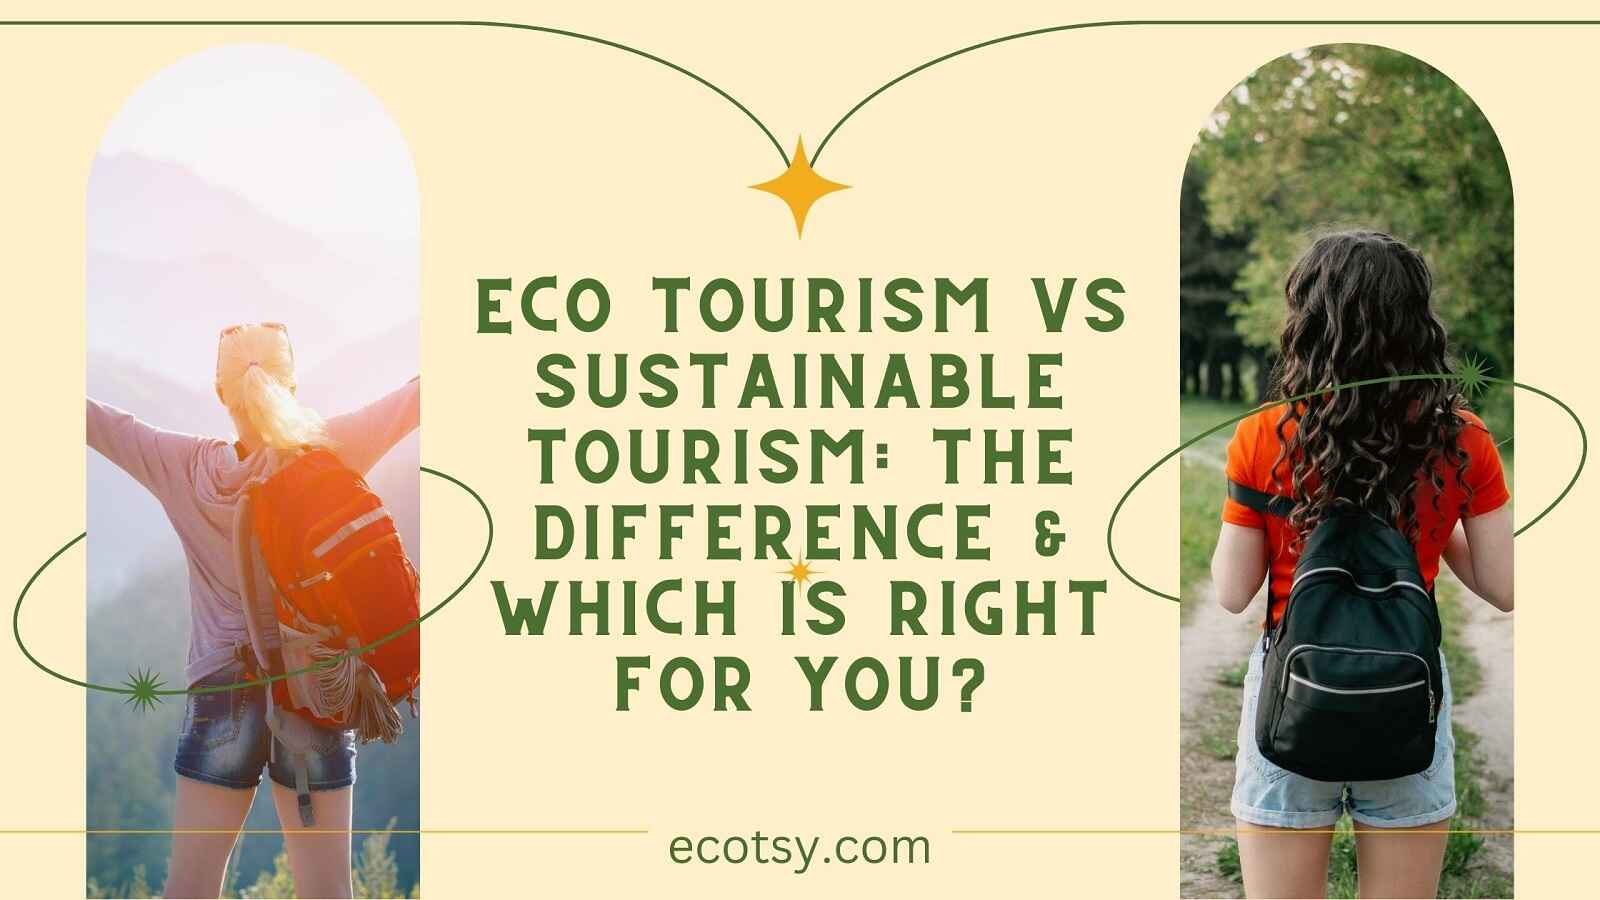 mass tourism vs sustainable tourism